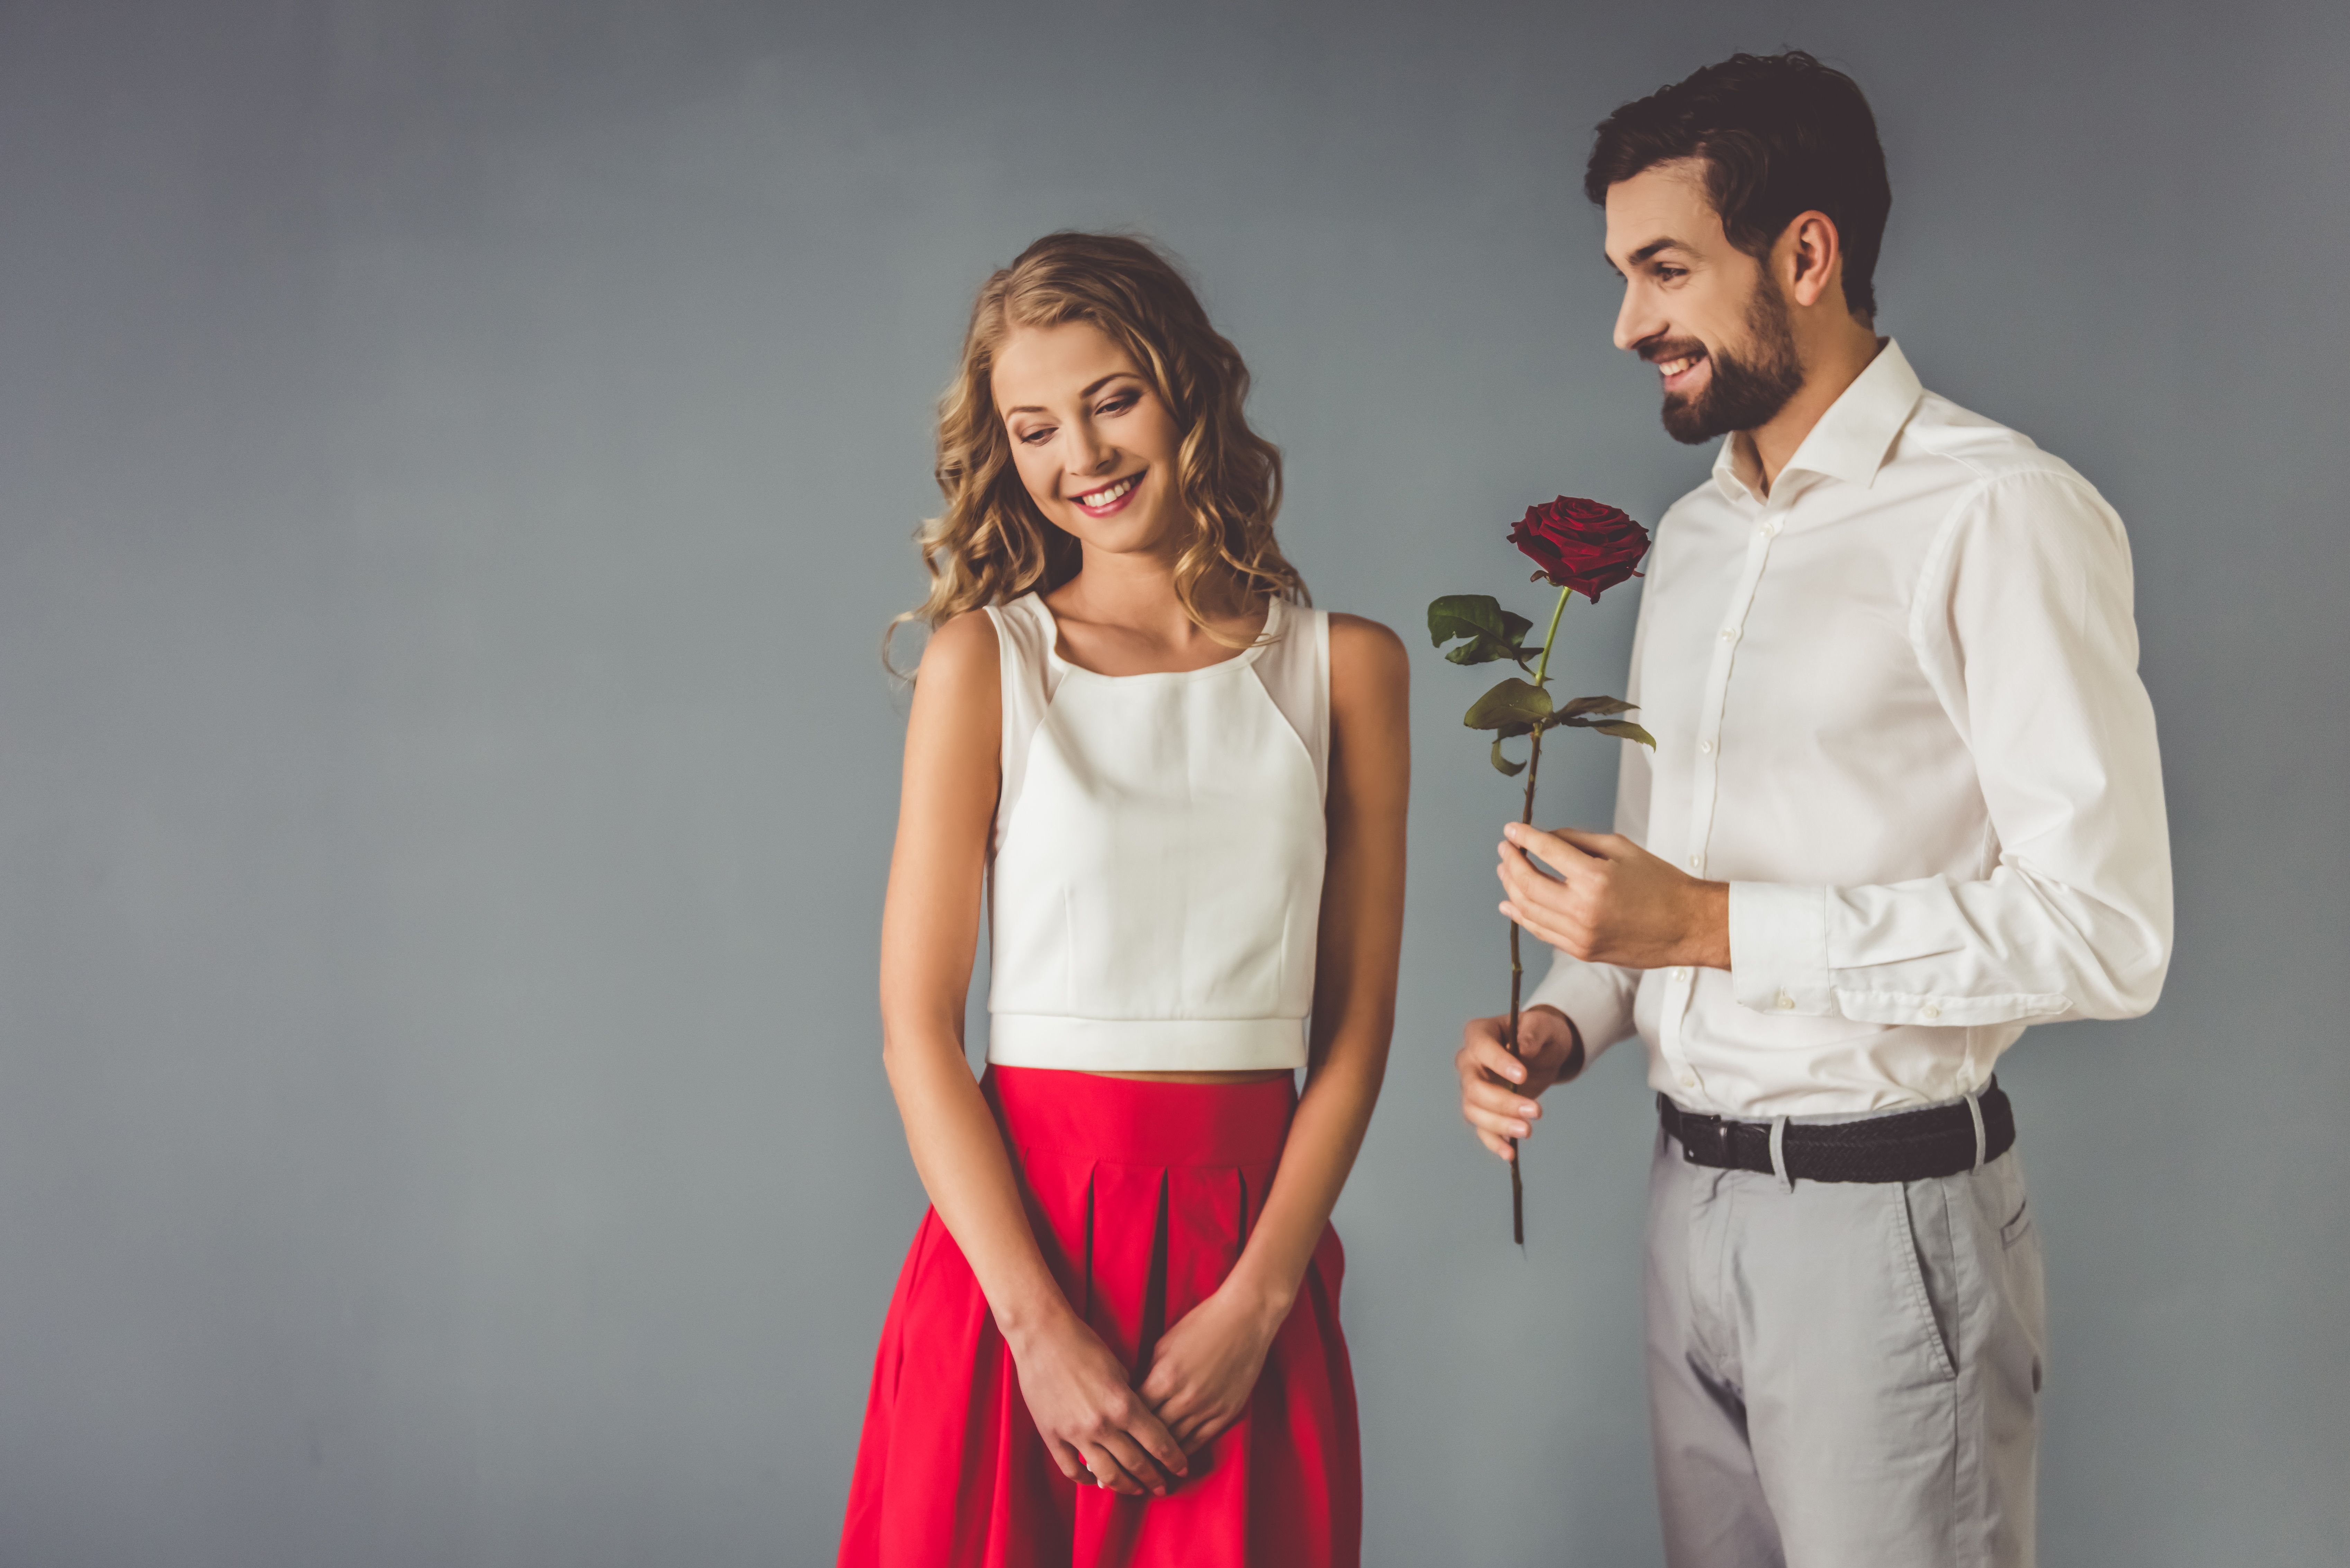 A man gives a woman a red flower. | Source: Shutterstock